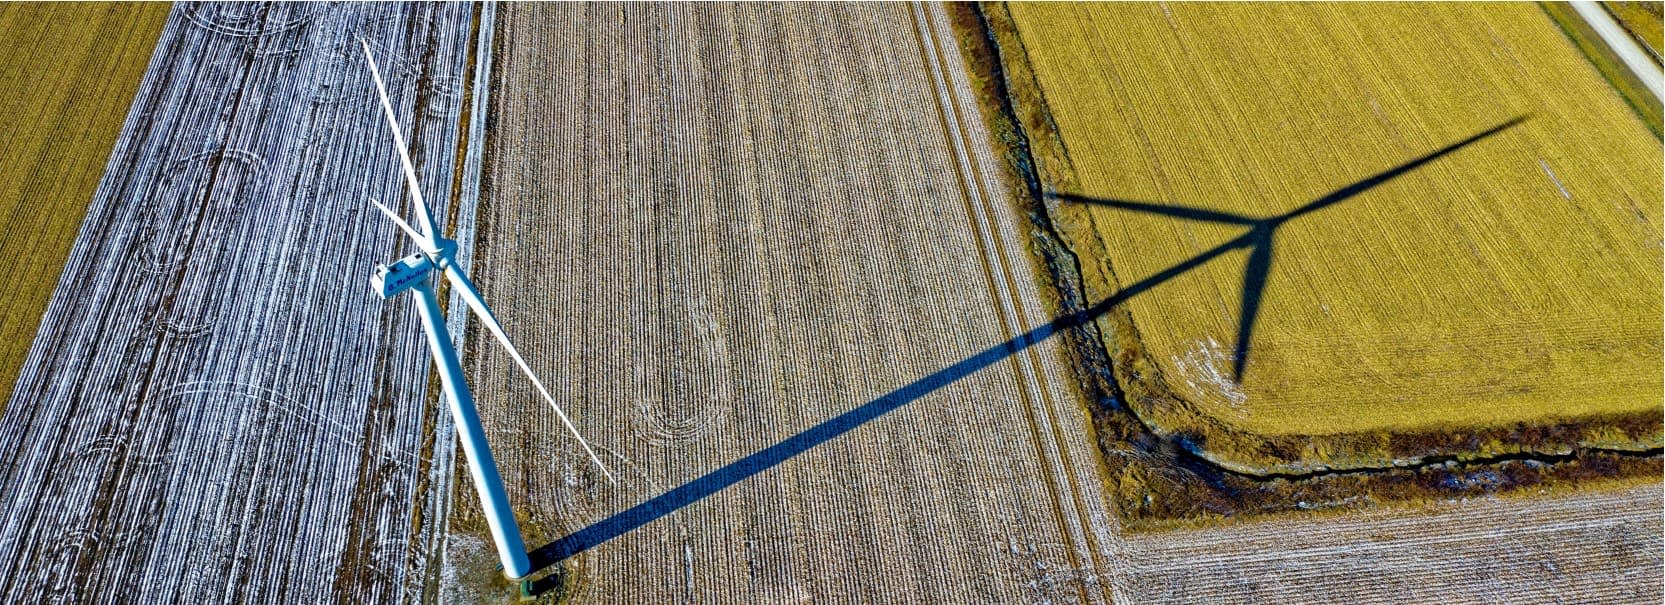 high-angle-photo-of-wind-turbine-on-field